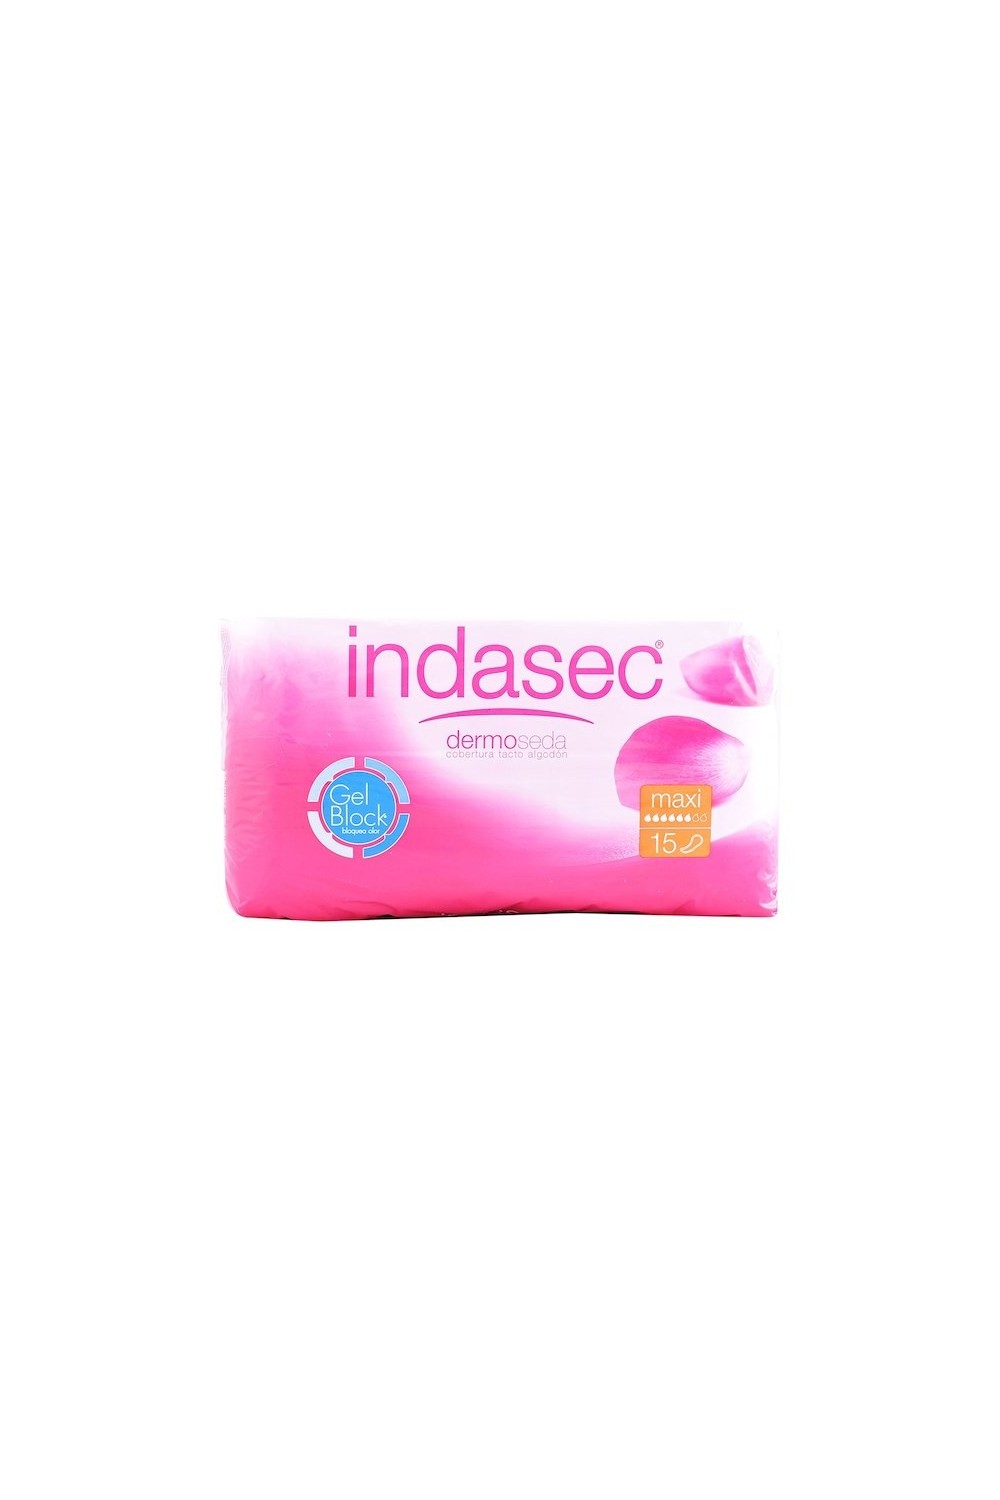 Indasec Dermoseda Compresses Incontinence Maxi 15 Units